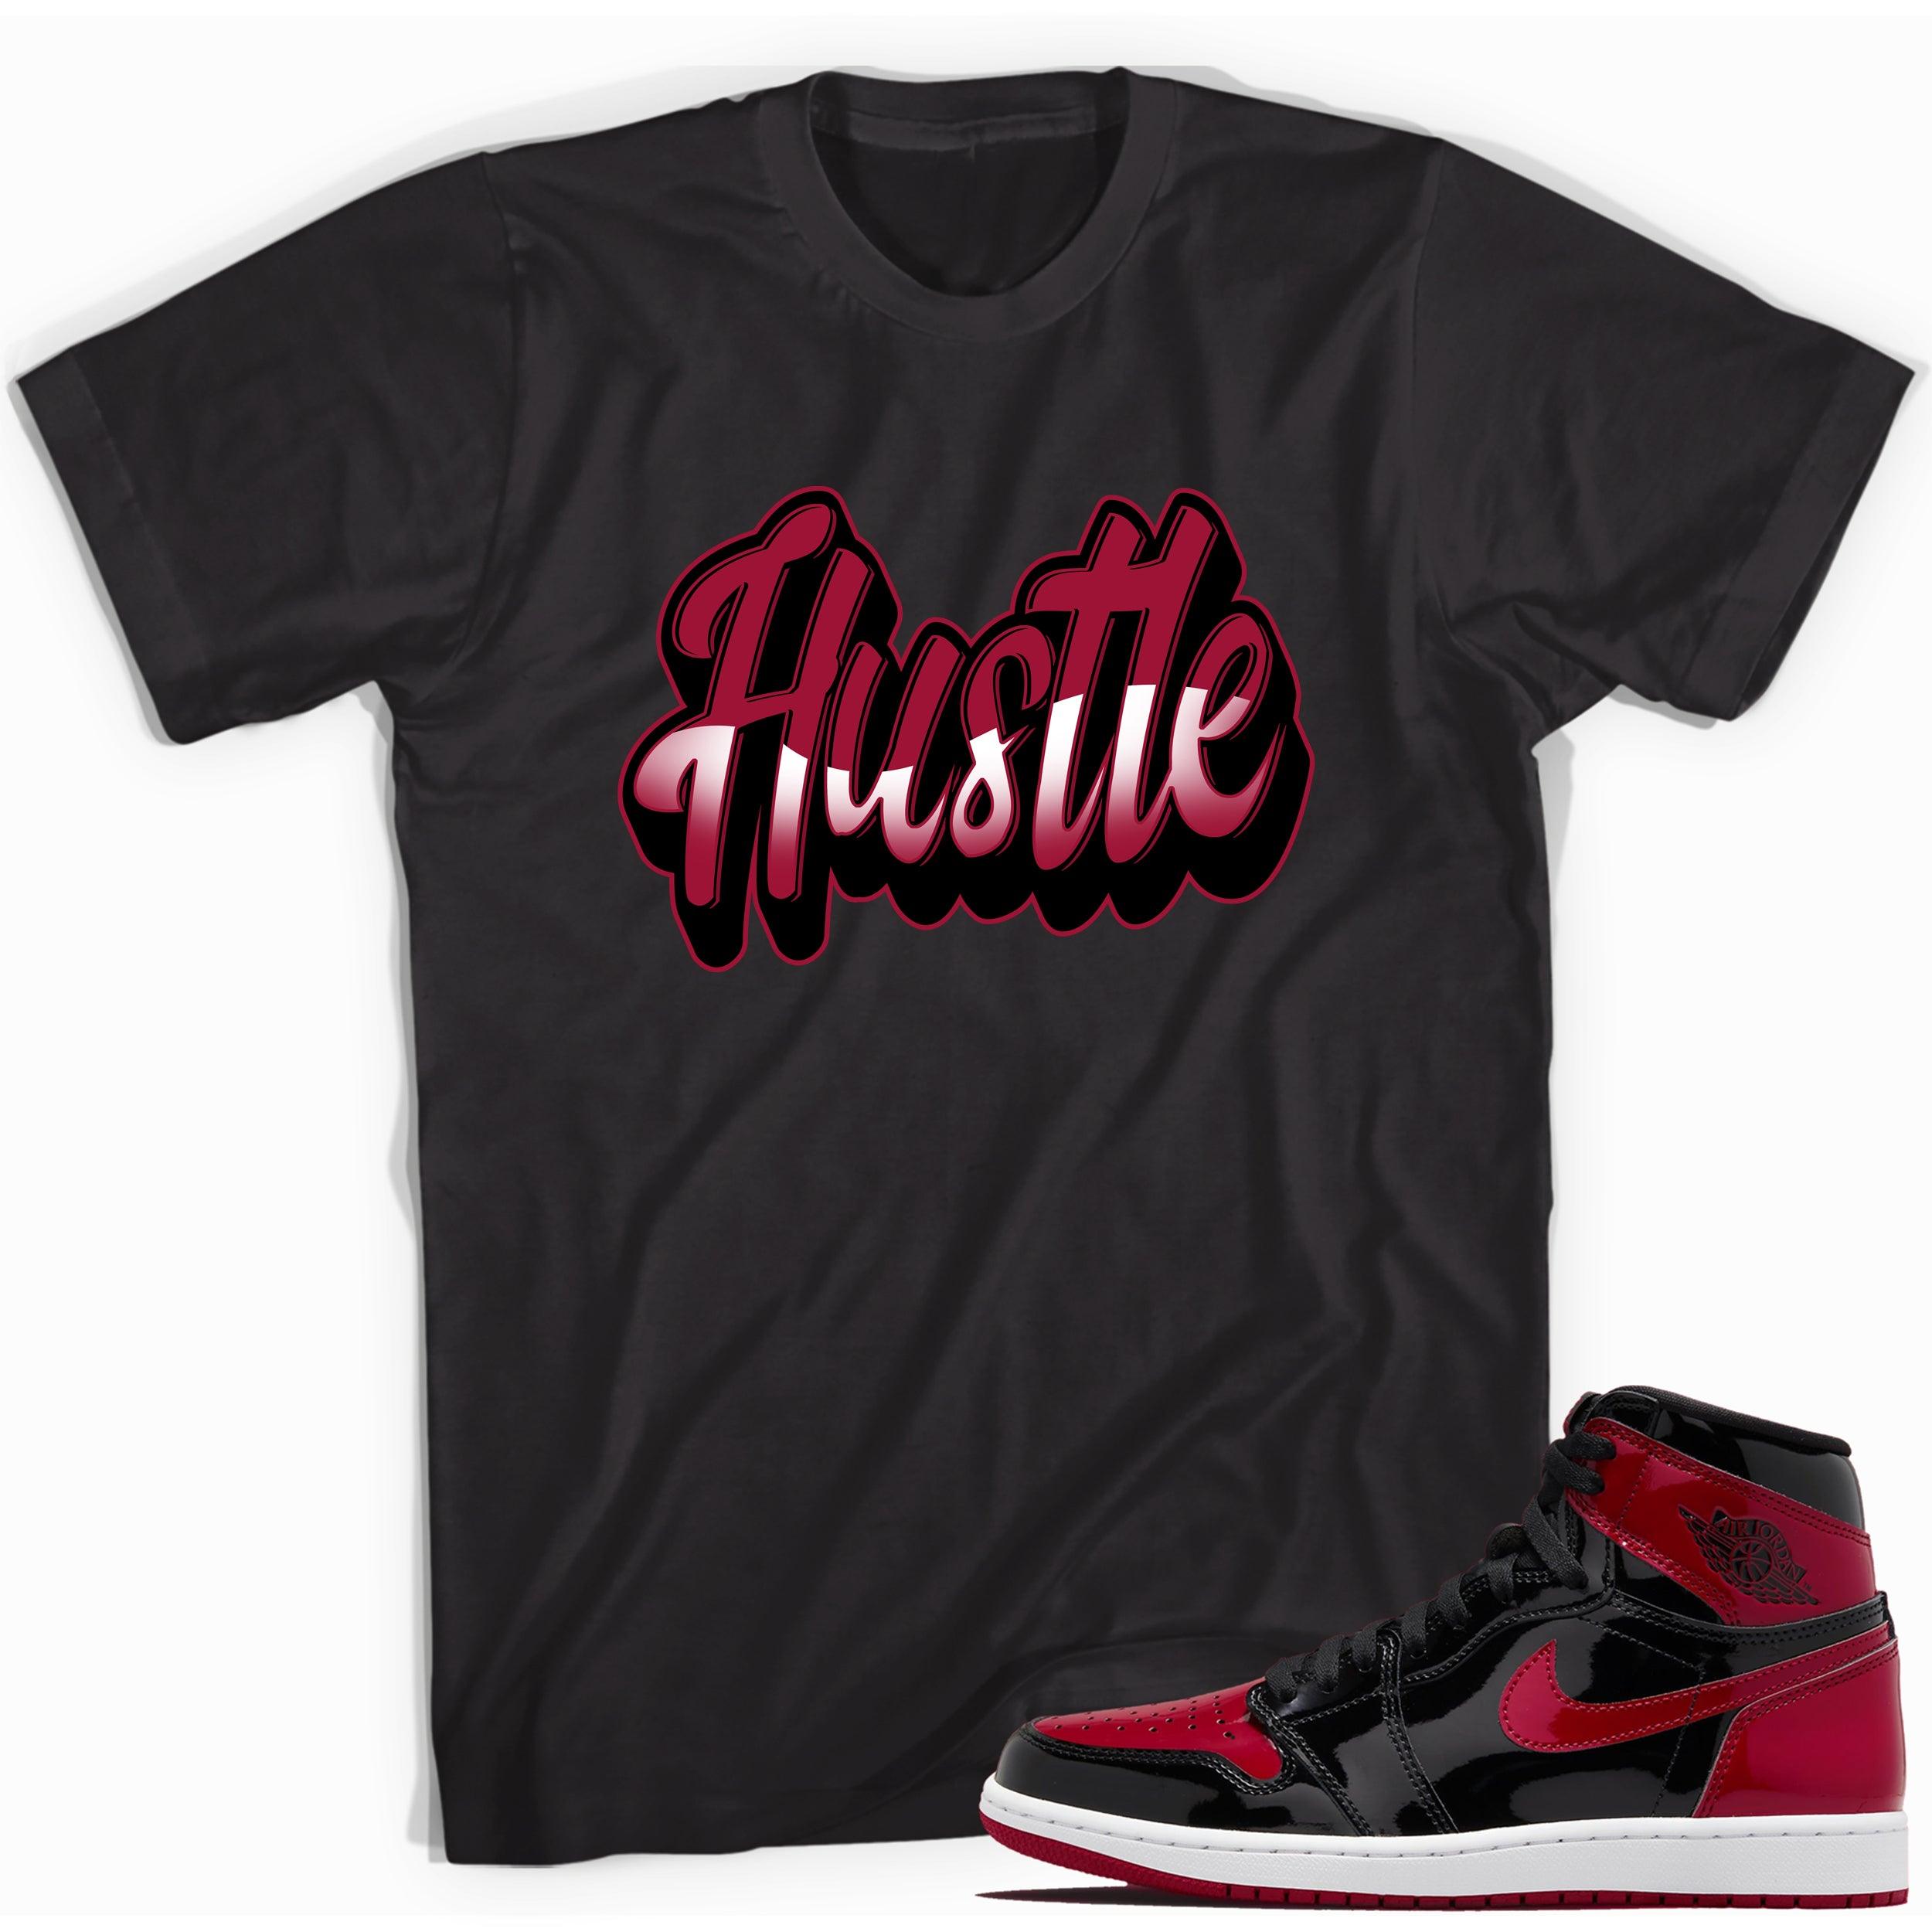 Black Hustle Shirt for Jordan 1s Bred Patent photo